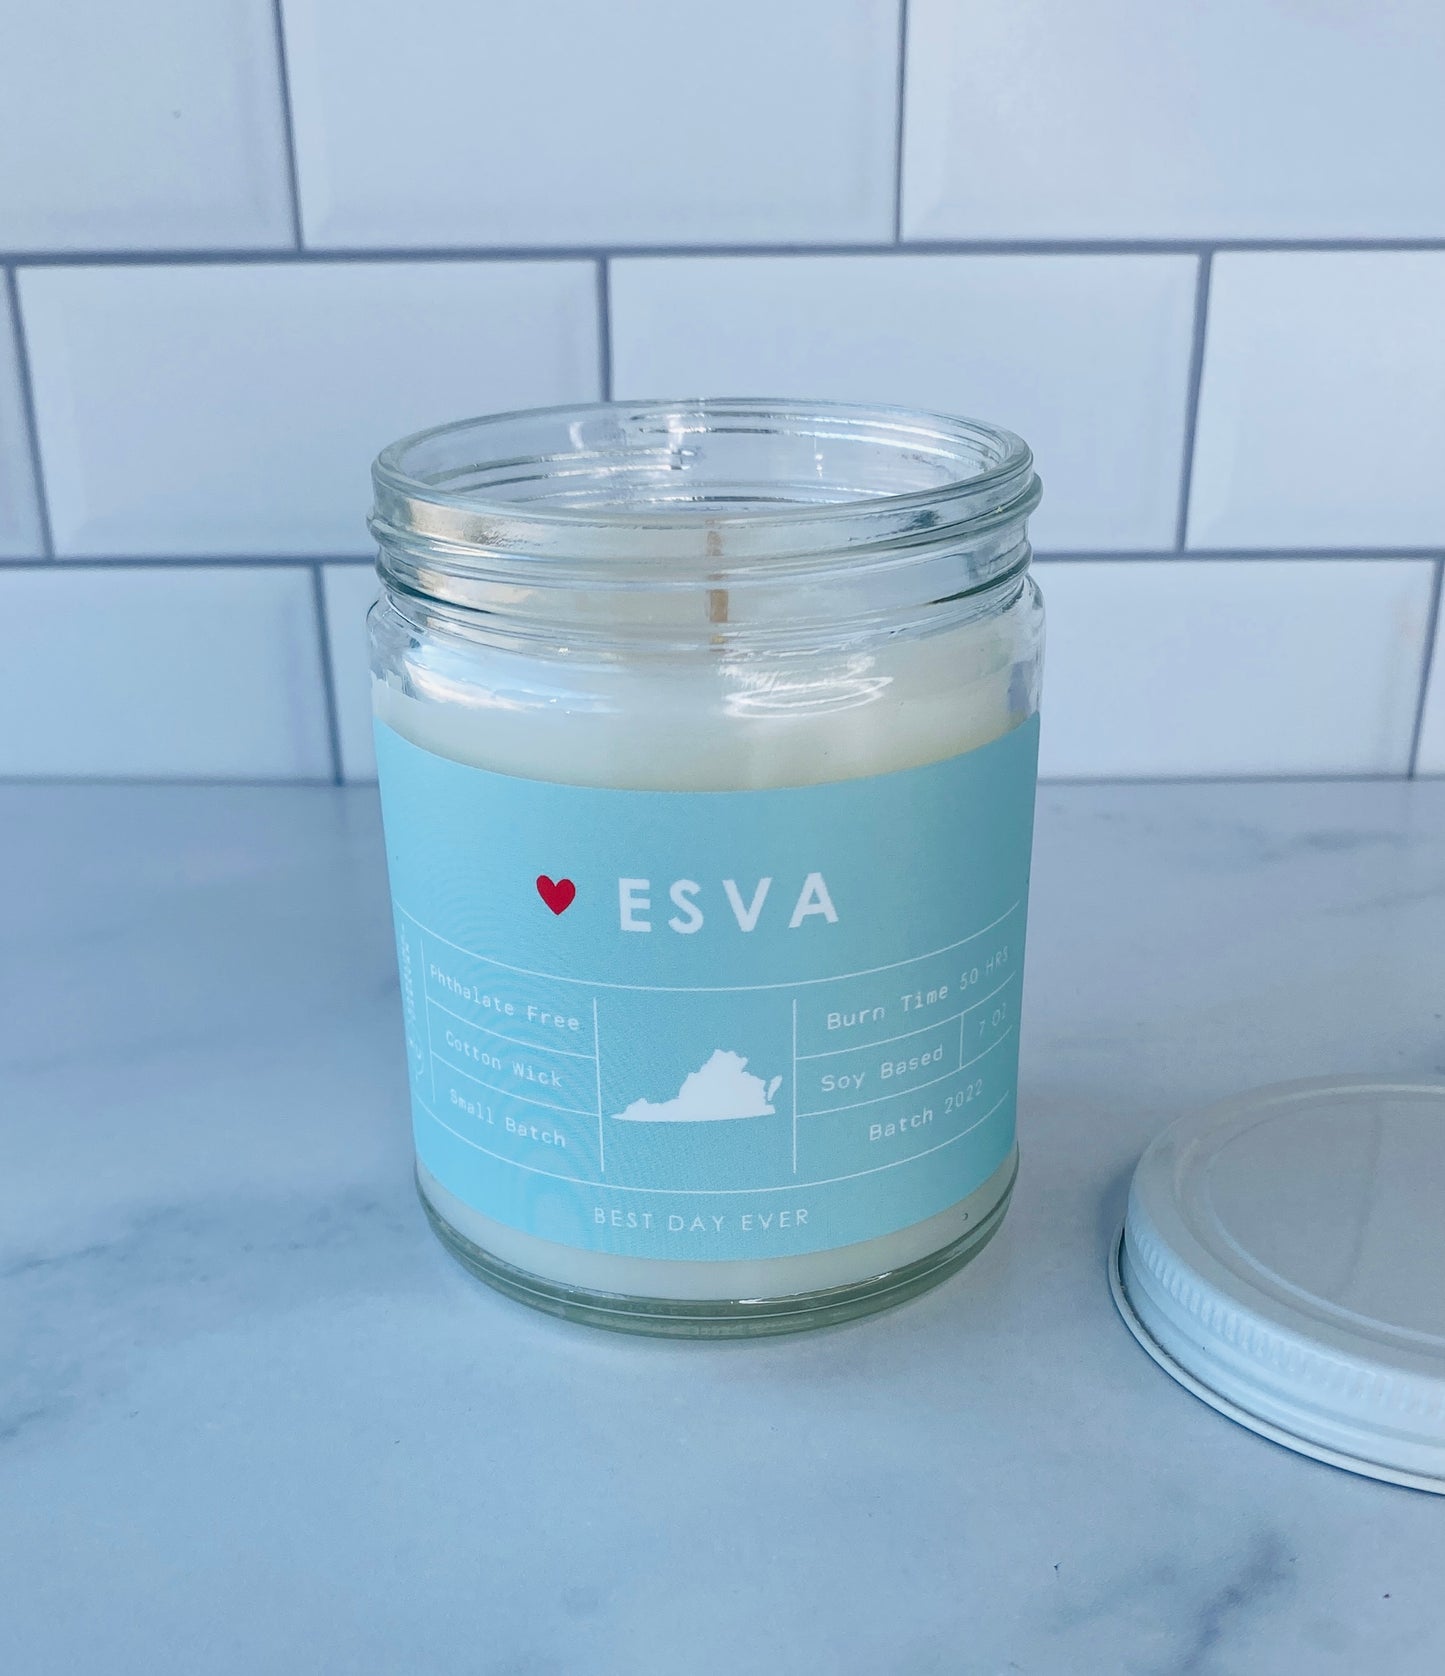 ESVA (Eastern Shore, VA) Candle